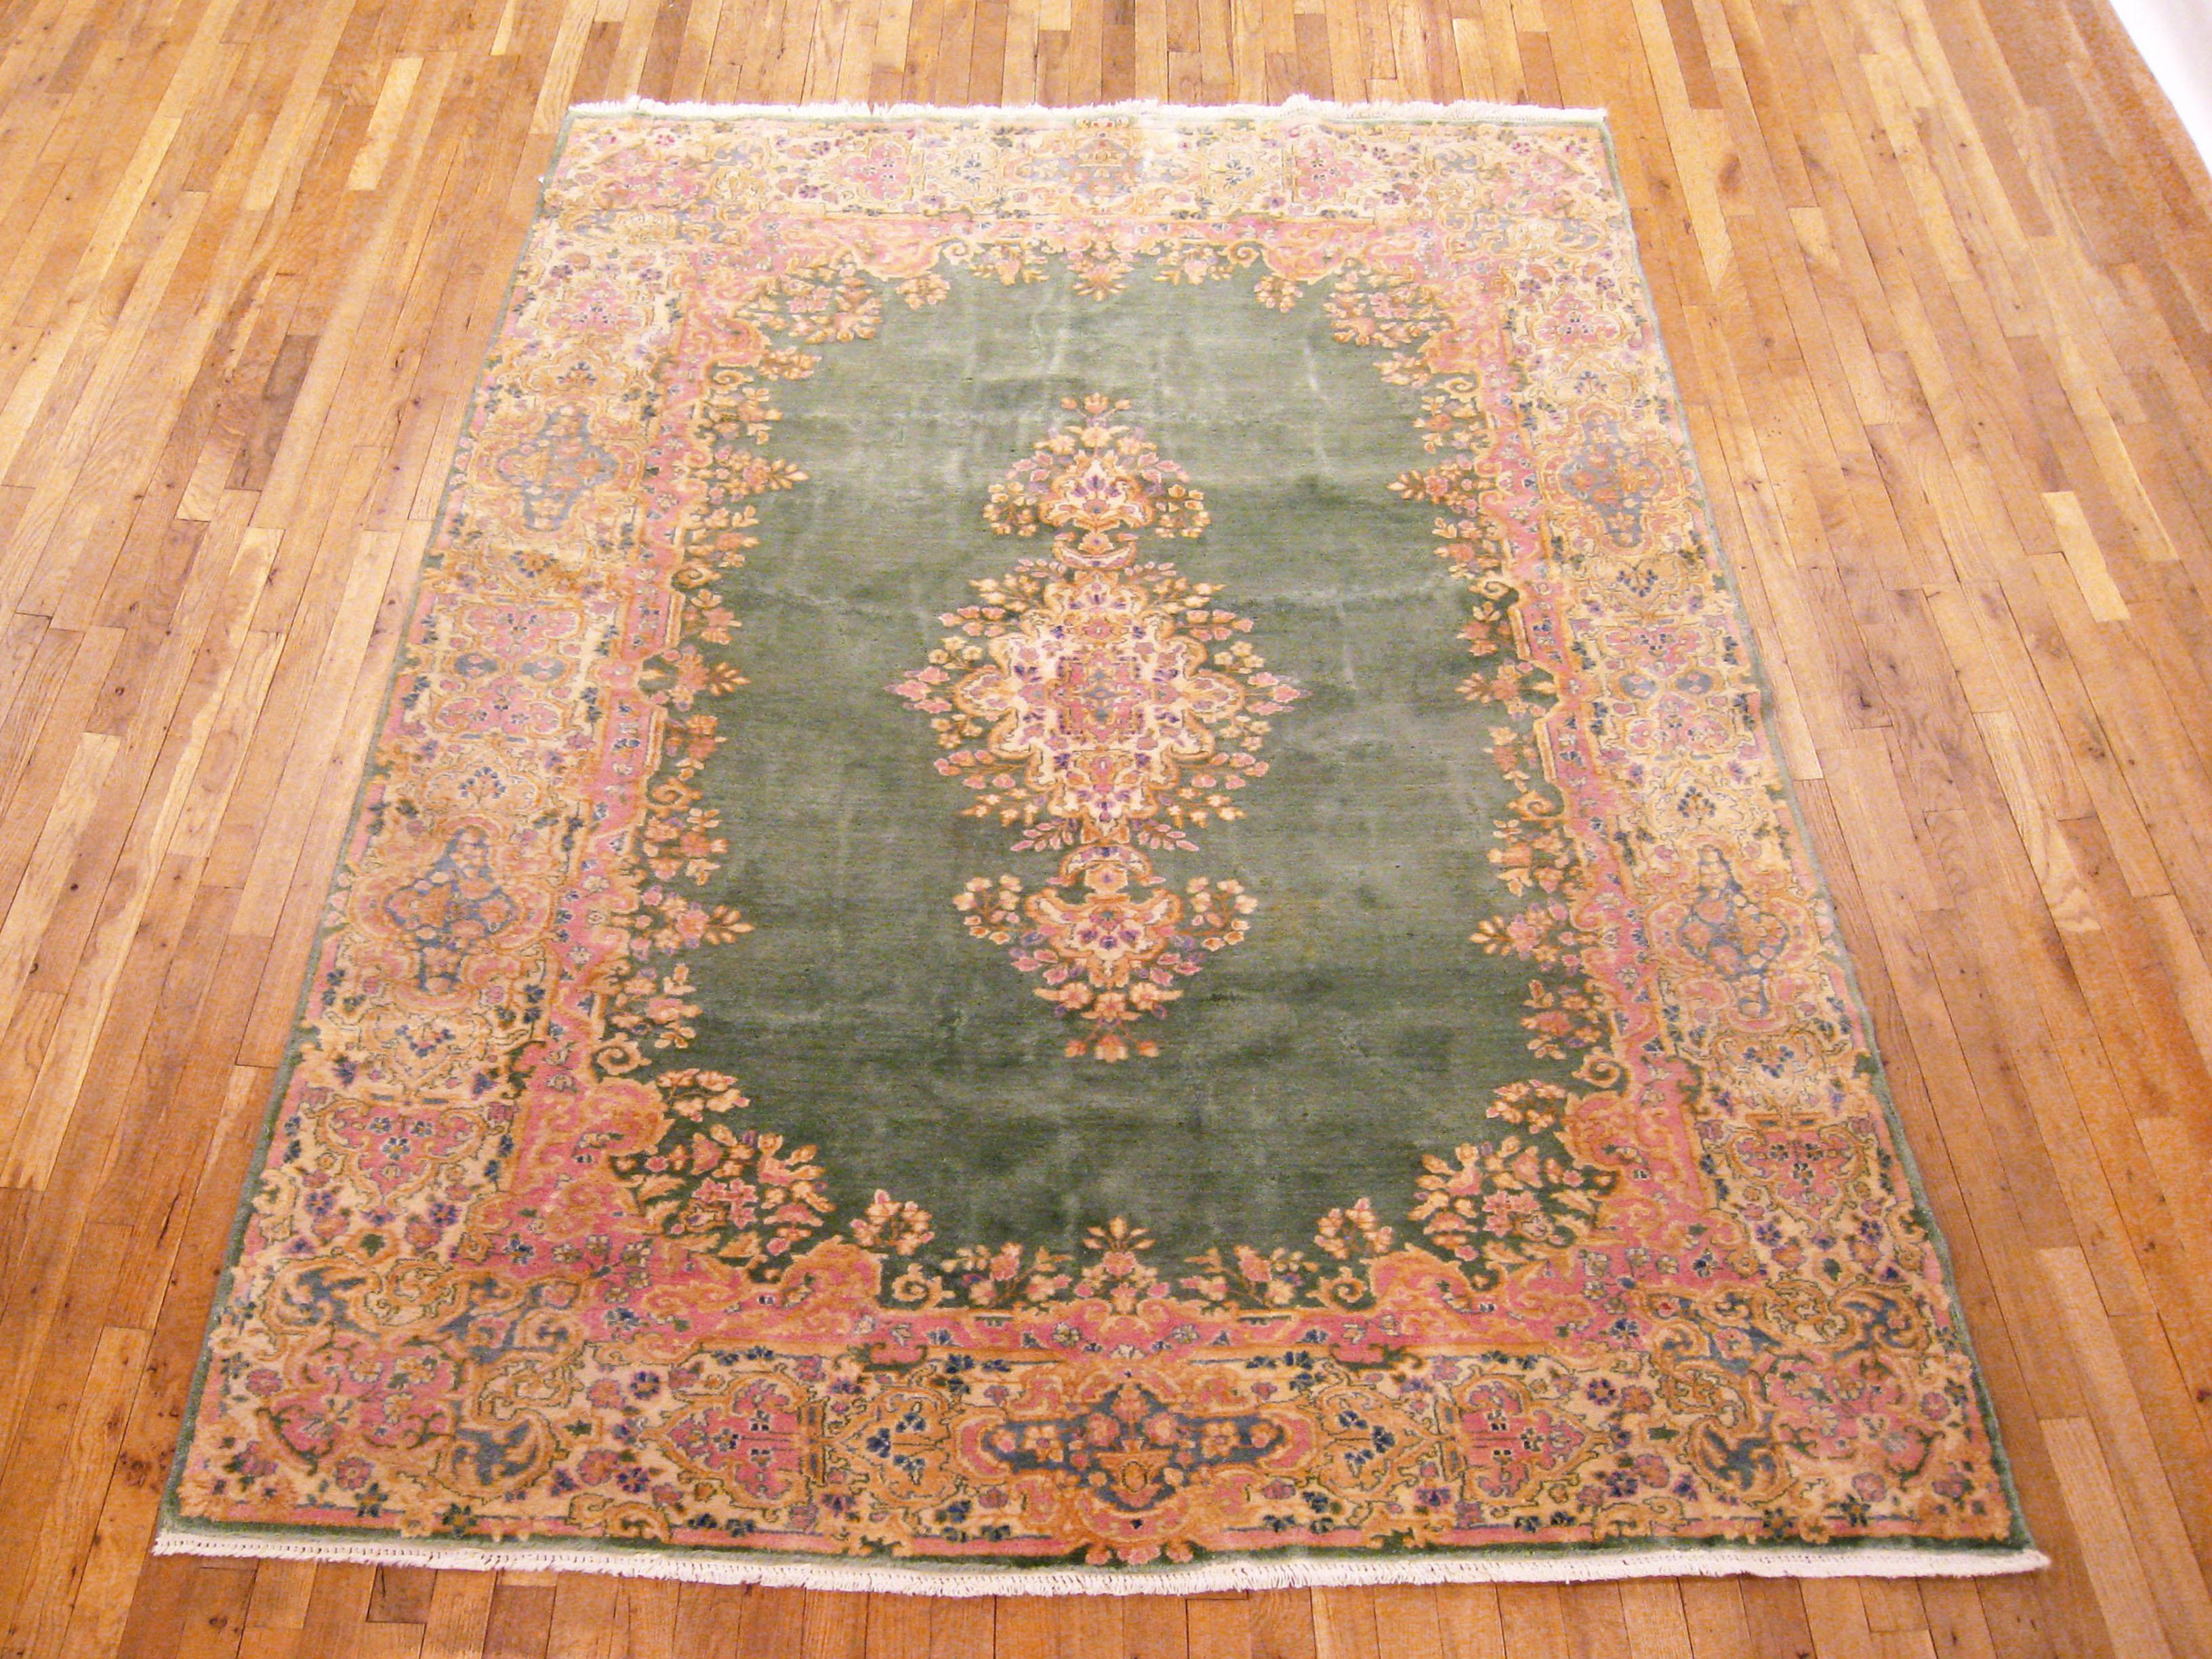 Vintage Persian Kerman oriental carpet, size 9'10